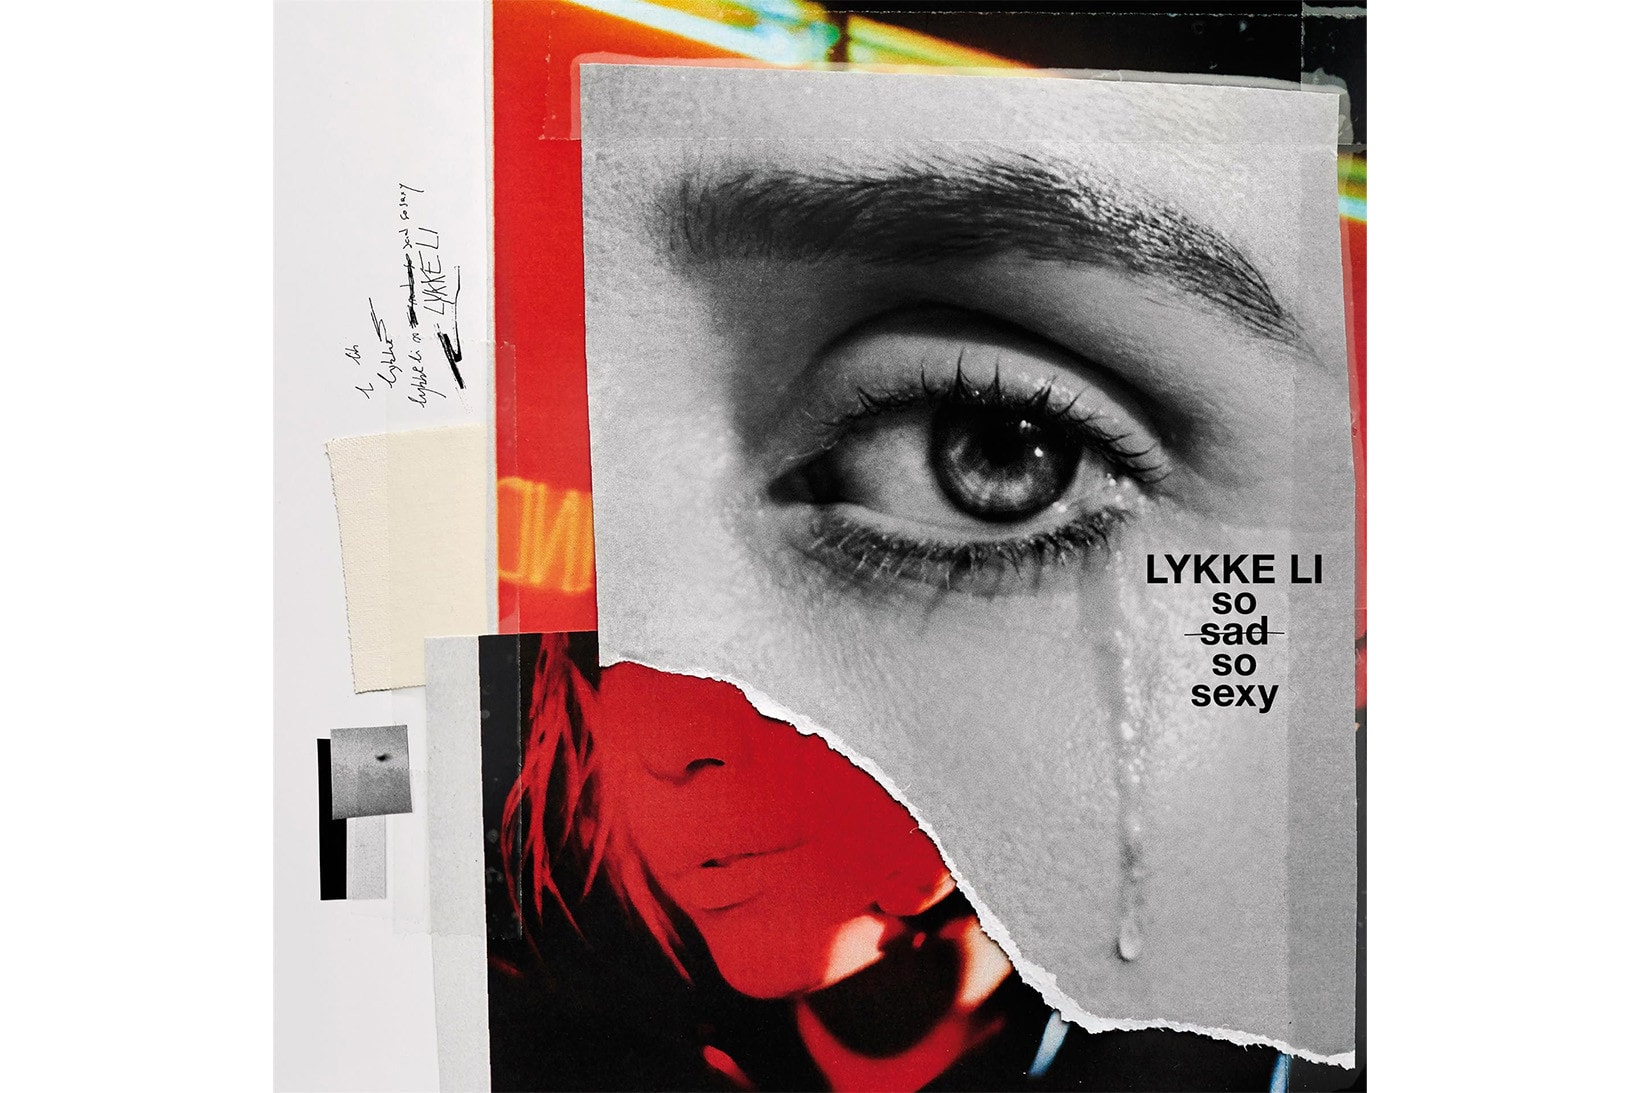 Lykke Li so sad so sexy Album Stream june 8 2018 release date info drop debut premiere new